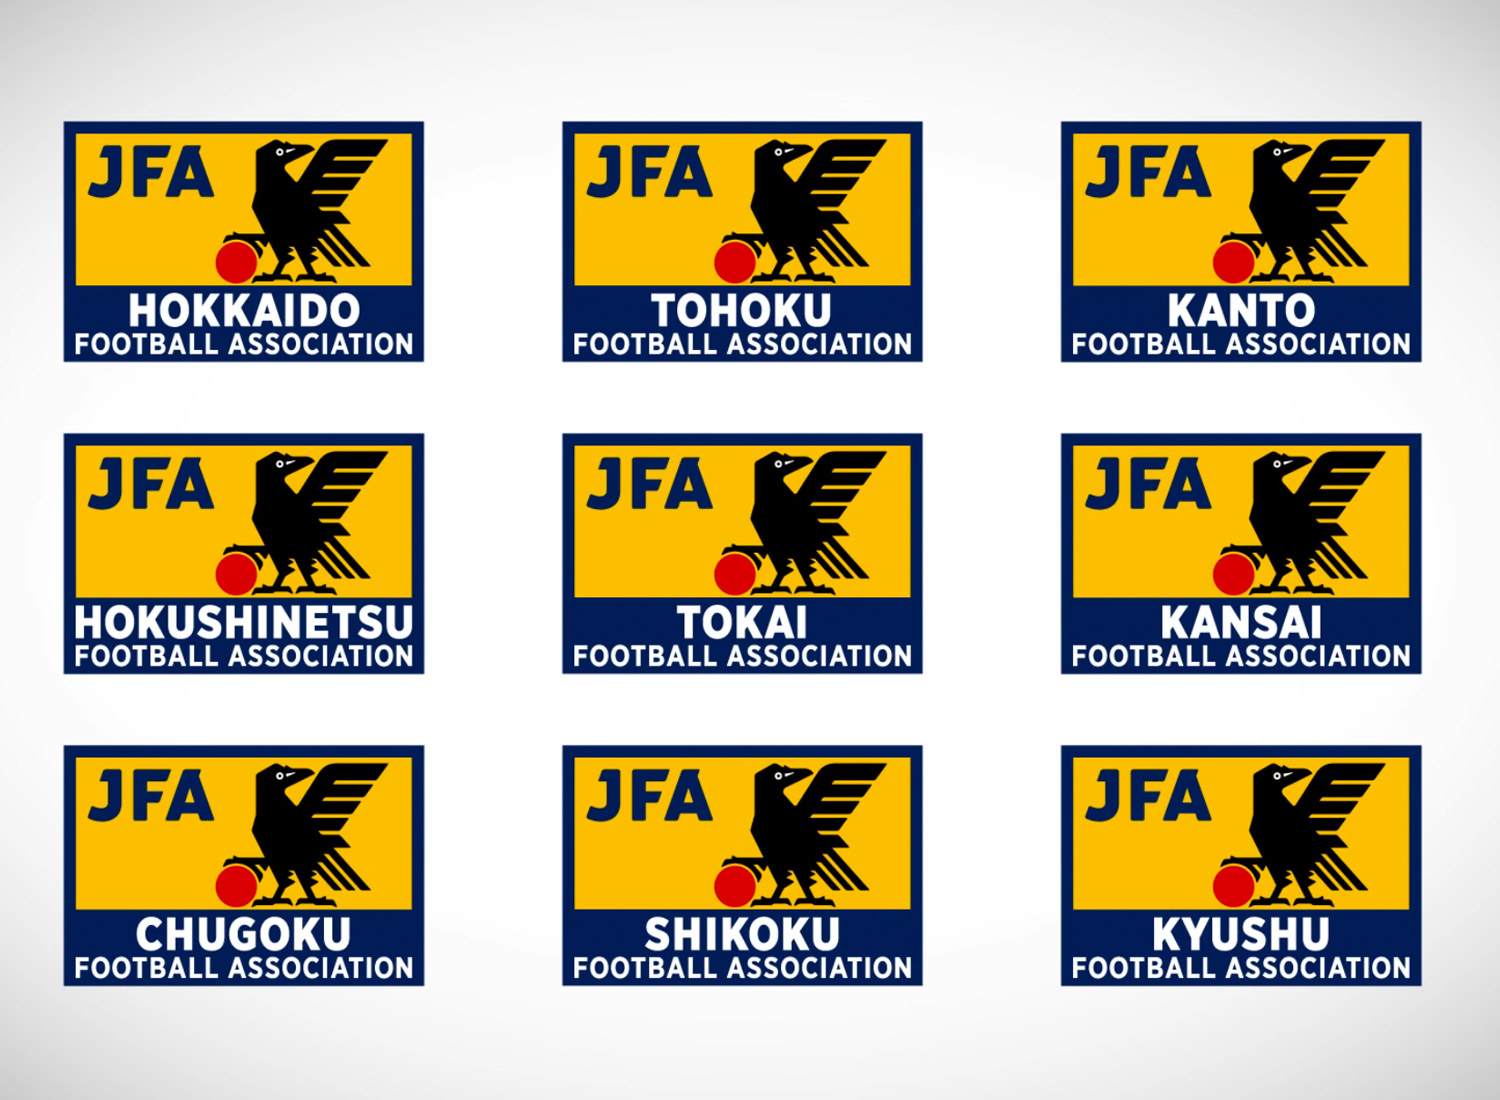 JFA Organisation